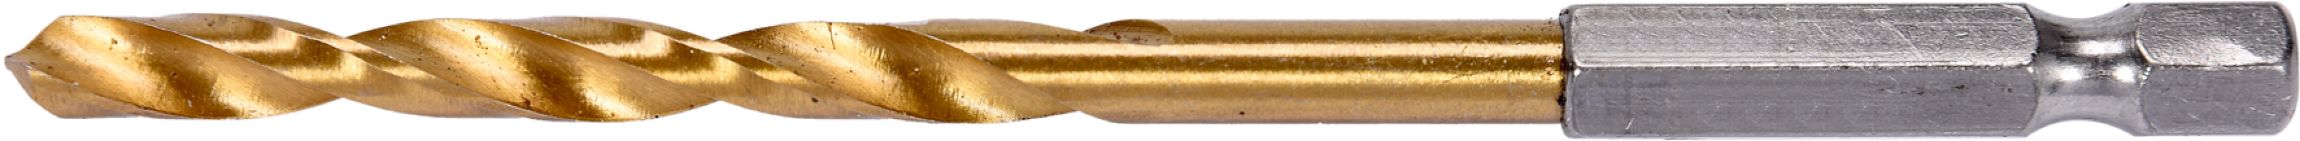 Vrtk do kovu HSS-titan 4,5mm se estihranou stopkou 1/4" Yato YT-44759